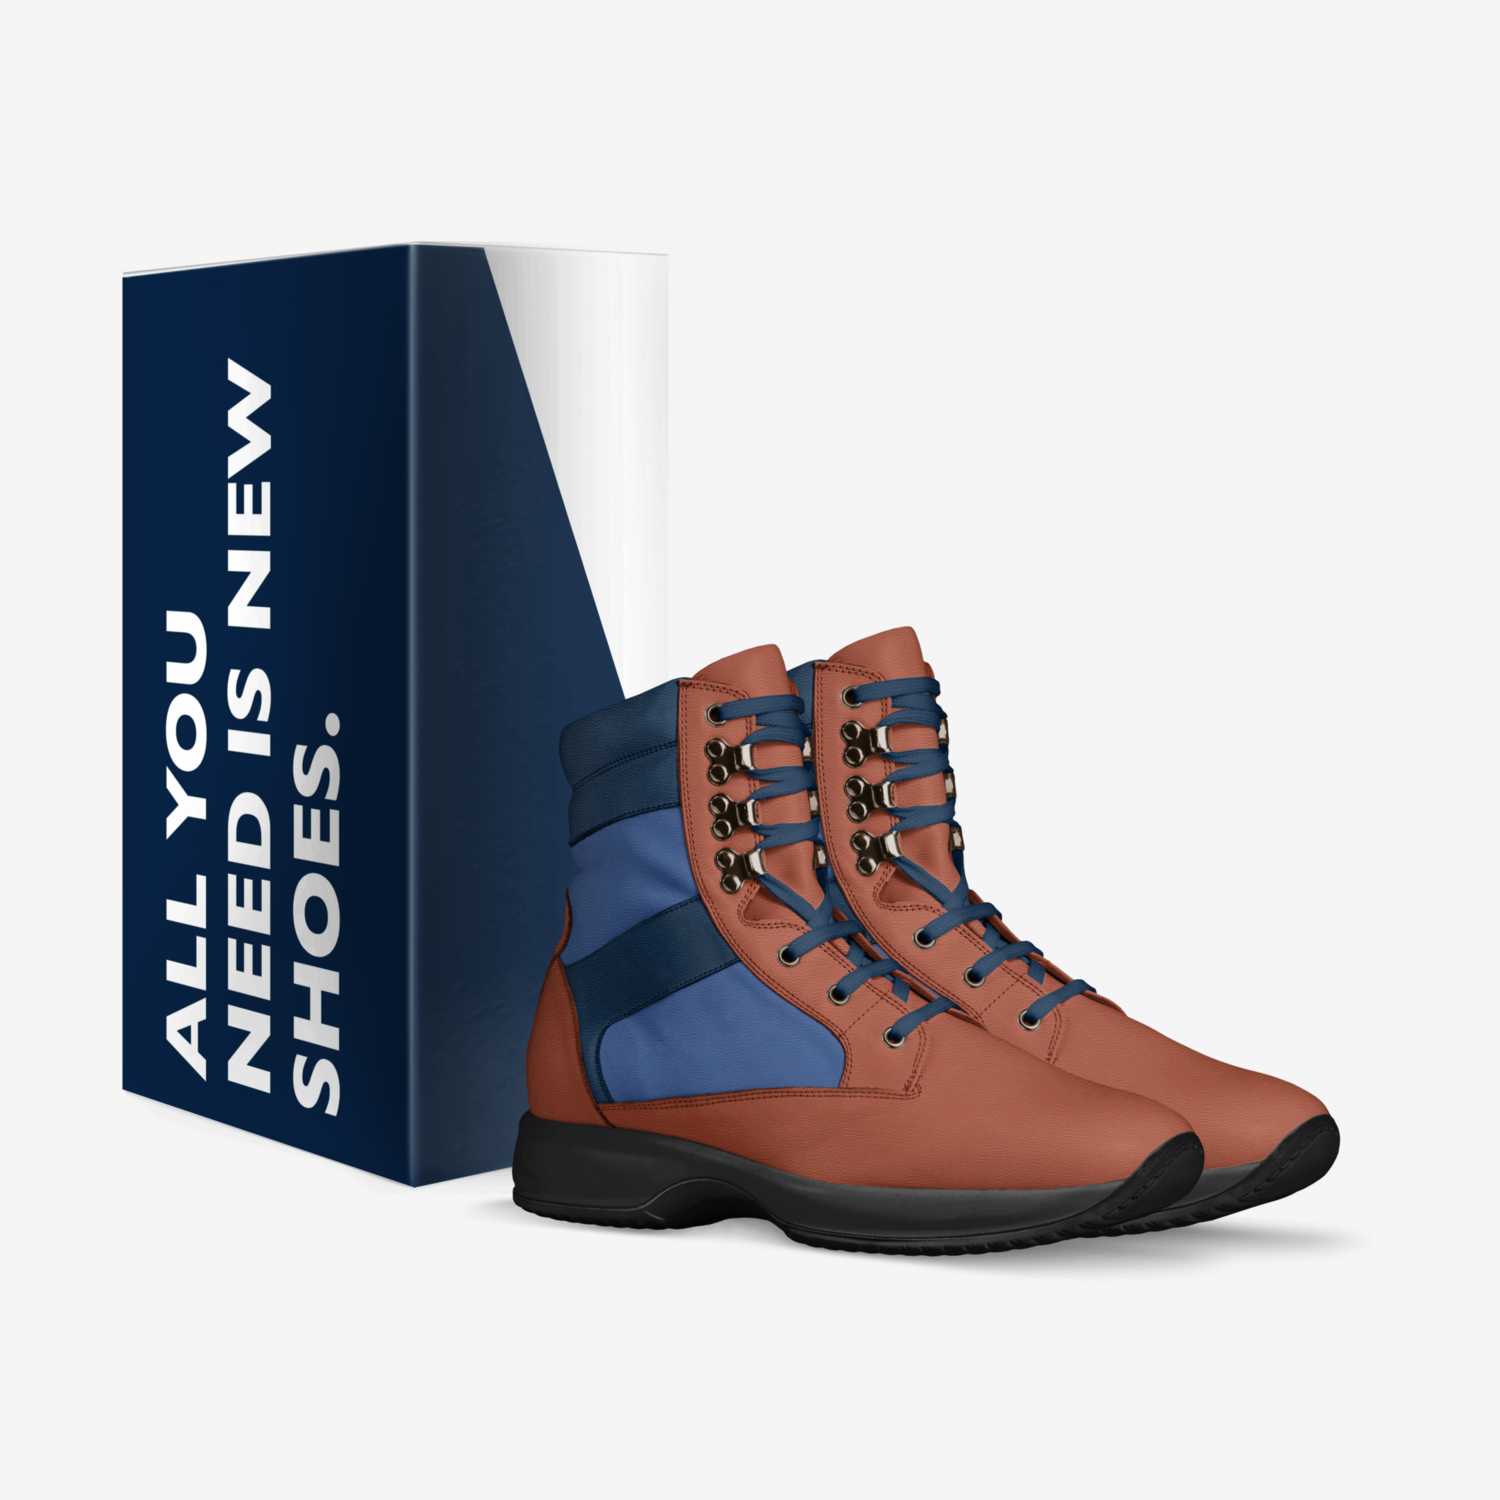 Aero custom made in Italy shoes by Mattnap2 | Box view